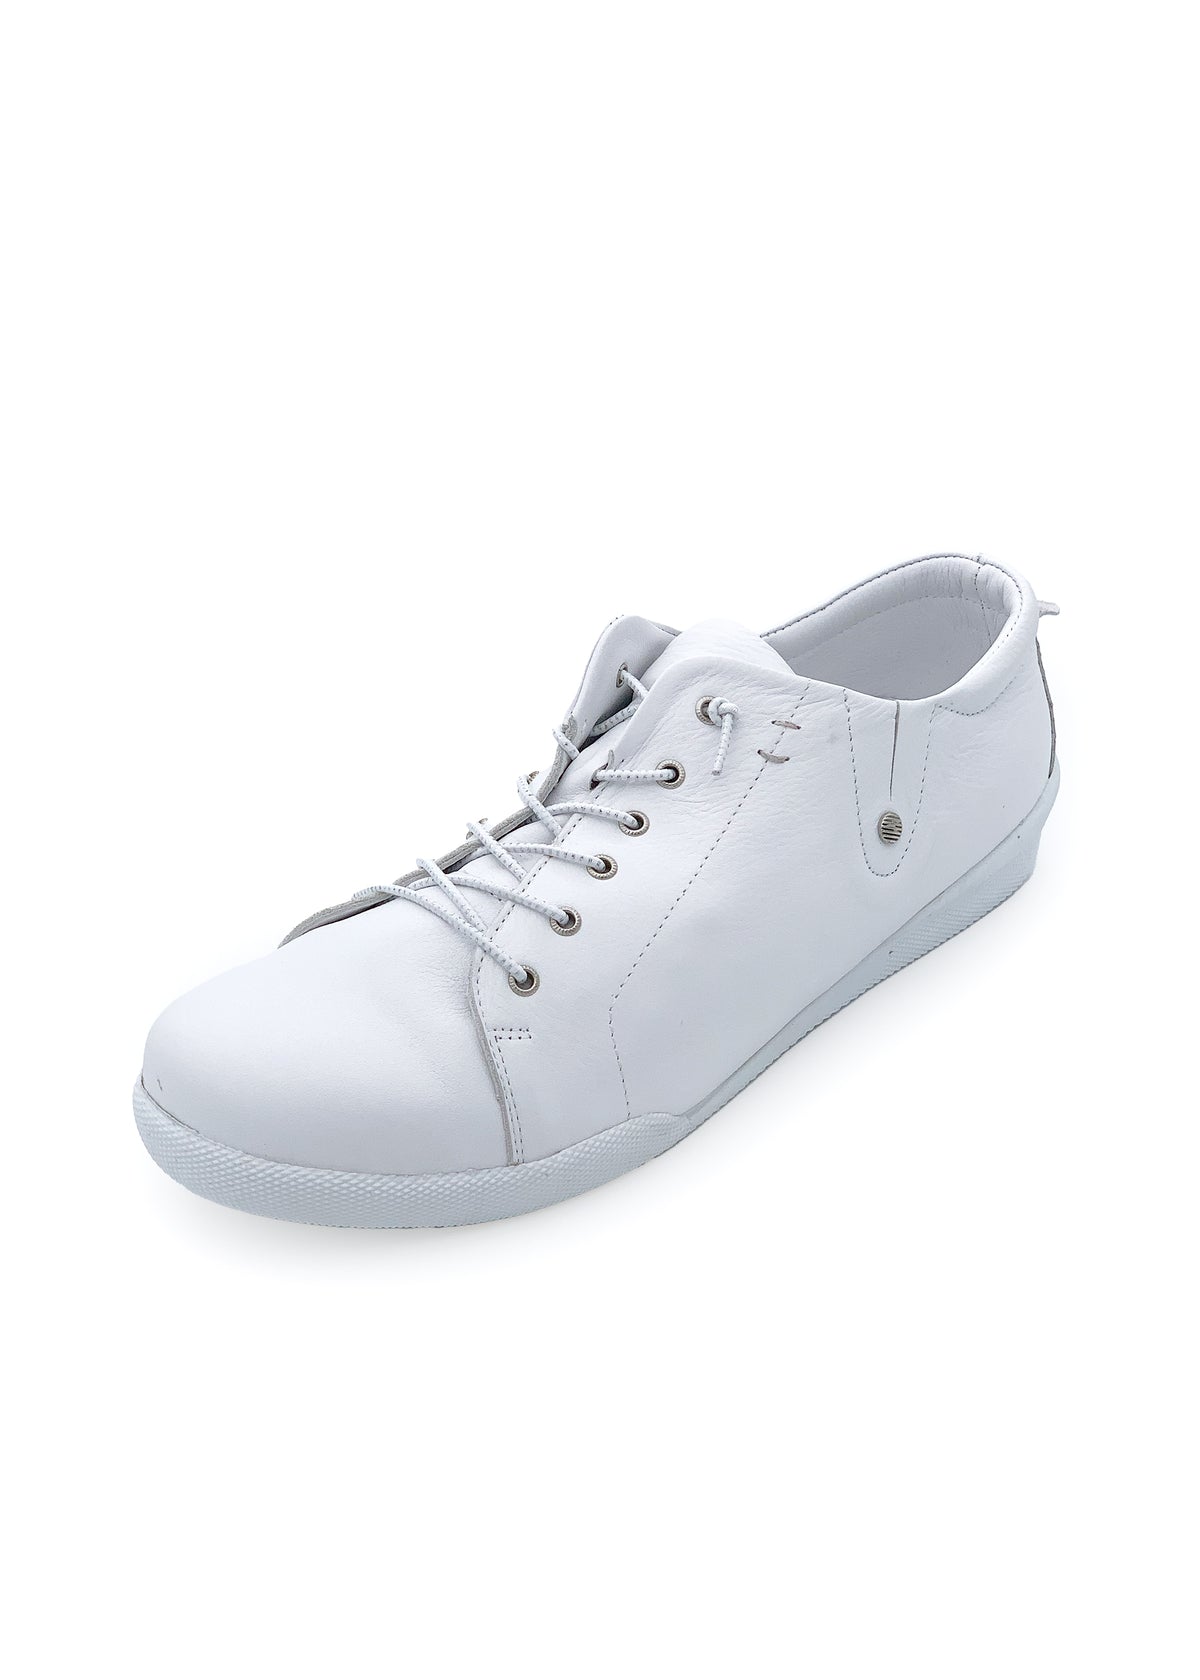 Low top sneakers - white, elastic straps